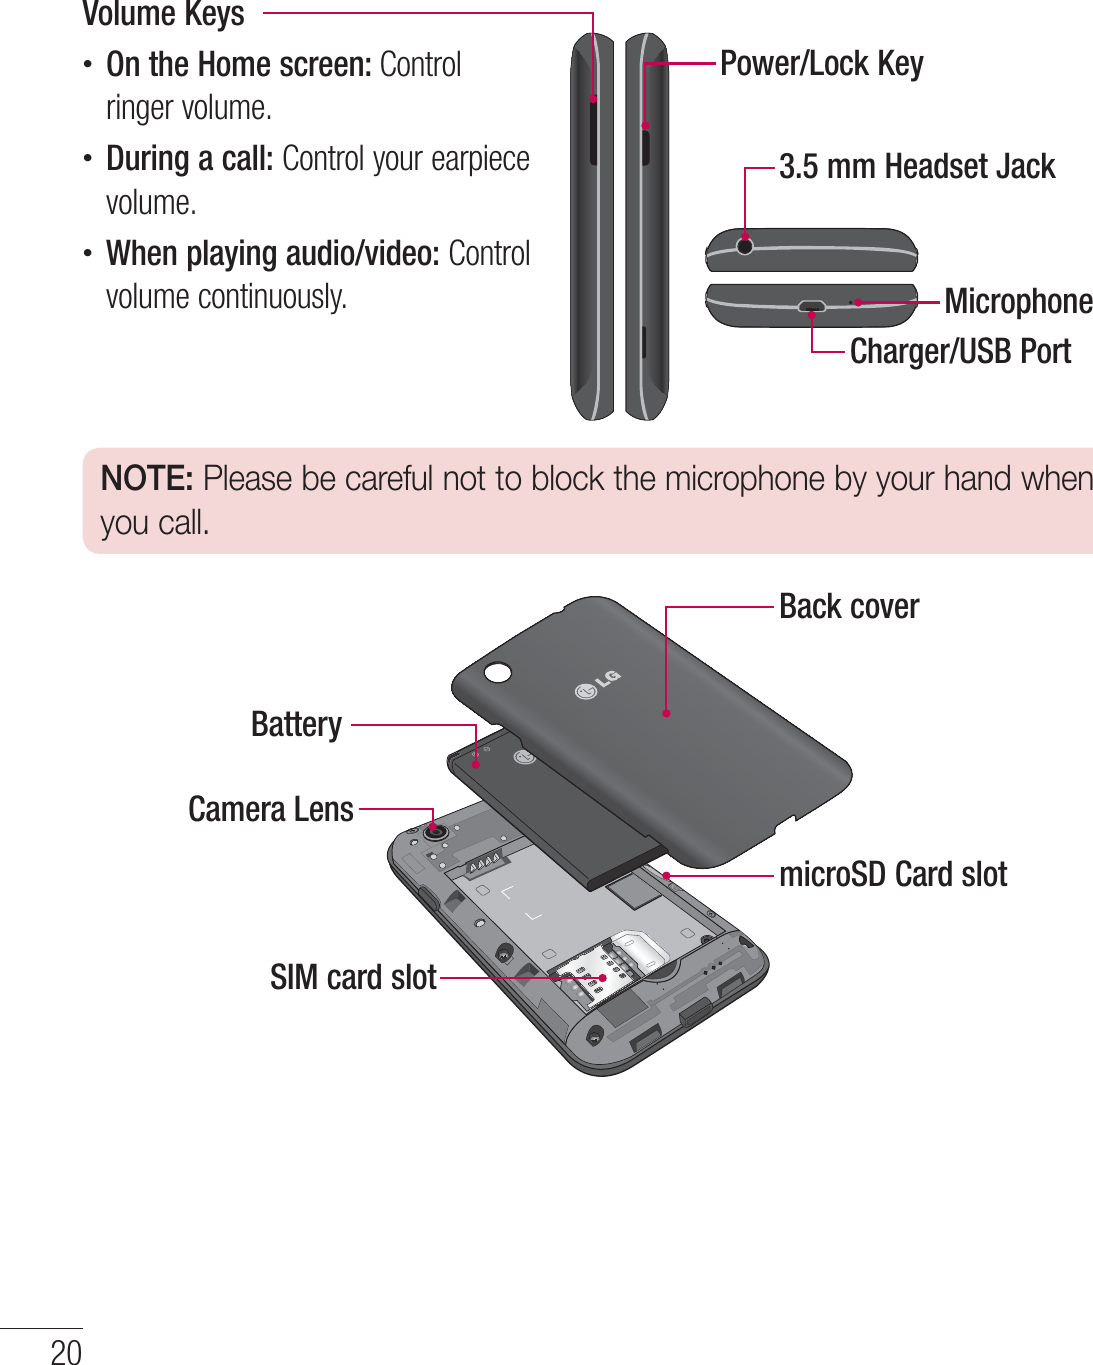 Power/Lock KeyVolume KeystOn the Home screen: $POUSPMSJOHFSWPMVNFtDuring a call:$POUSPMZPVSFBSQJFDFWPMVNFtWhen playing audio/video:$POUSPMWPMVNFDPOUJOVPVTMZCharger/USB PortMicrophone3.5mm Headset JackNOTE: Please be careful not to block the microphone by your hand when you call.Back covermicroSD Card slotCamera LensBatterySIM card slot